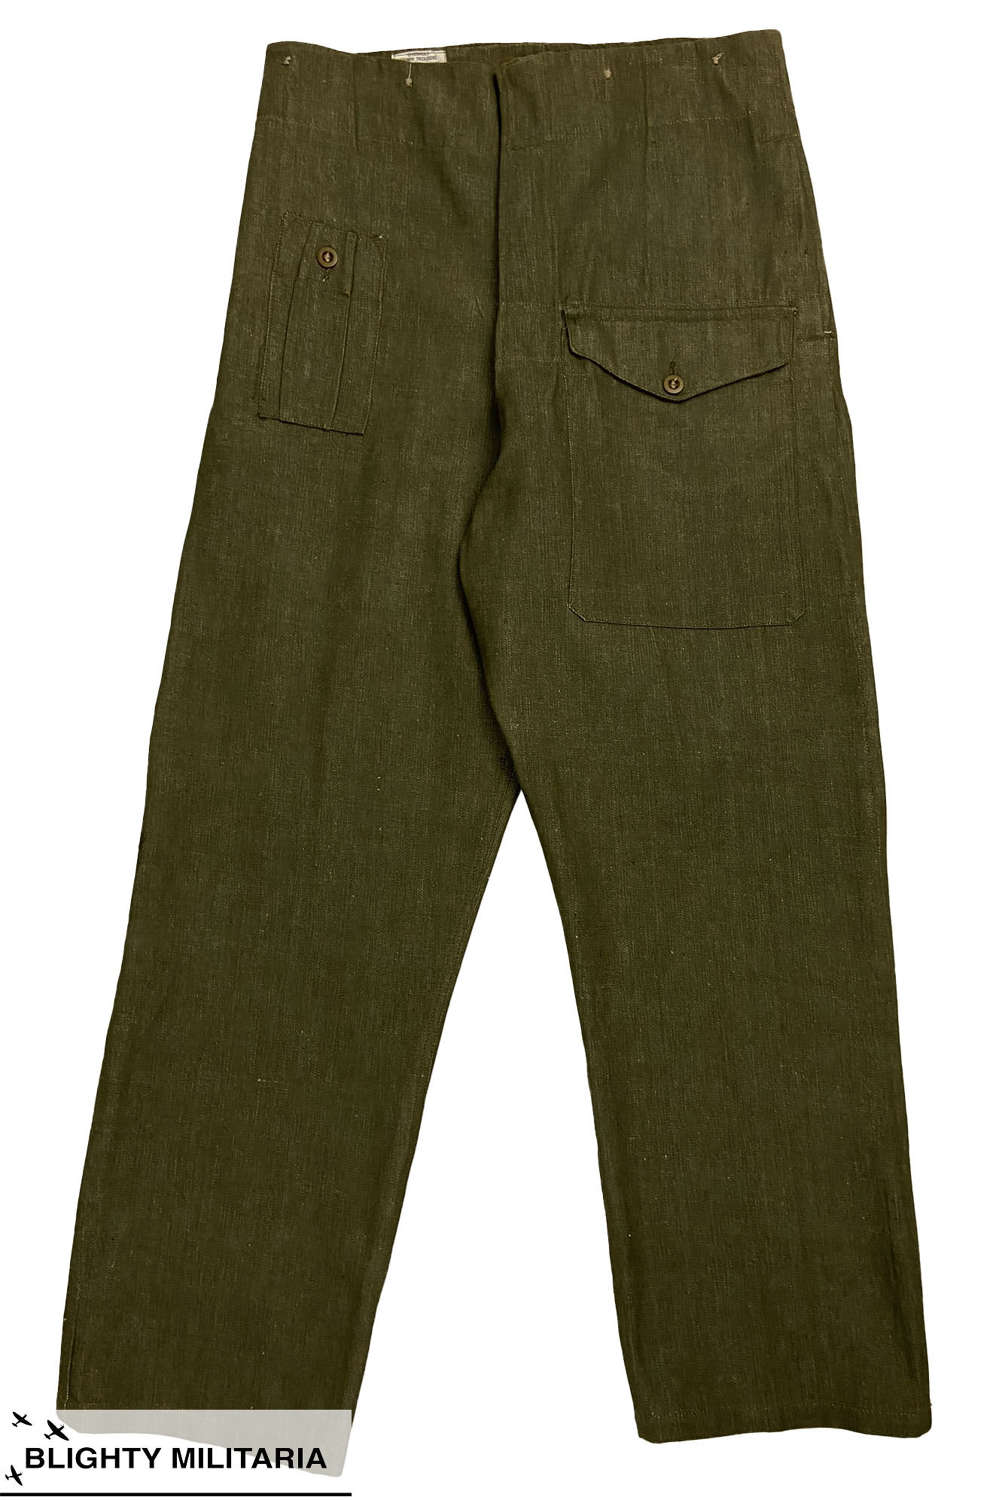 Original 1954 Dated British Denim Battledress Trousers - Size 8